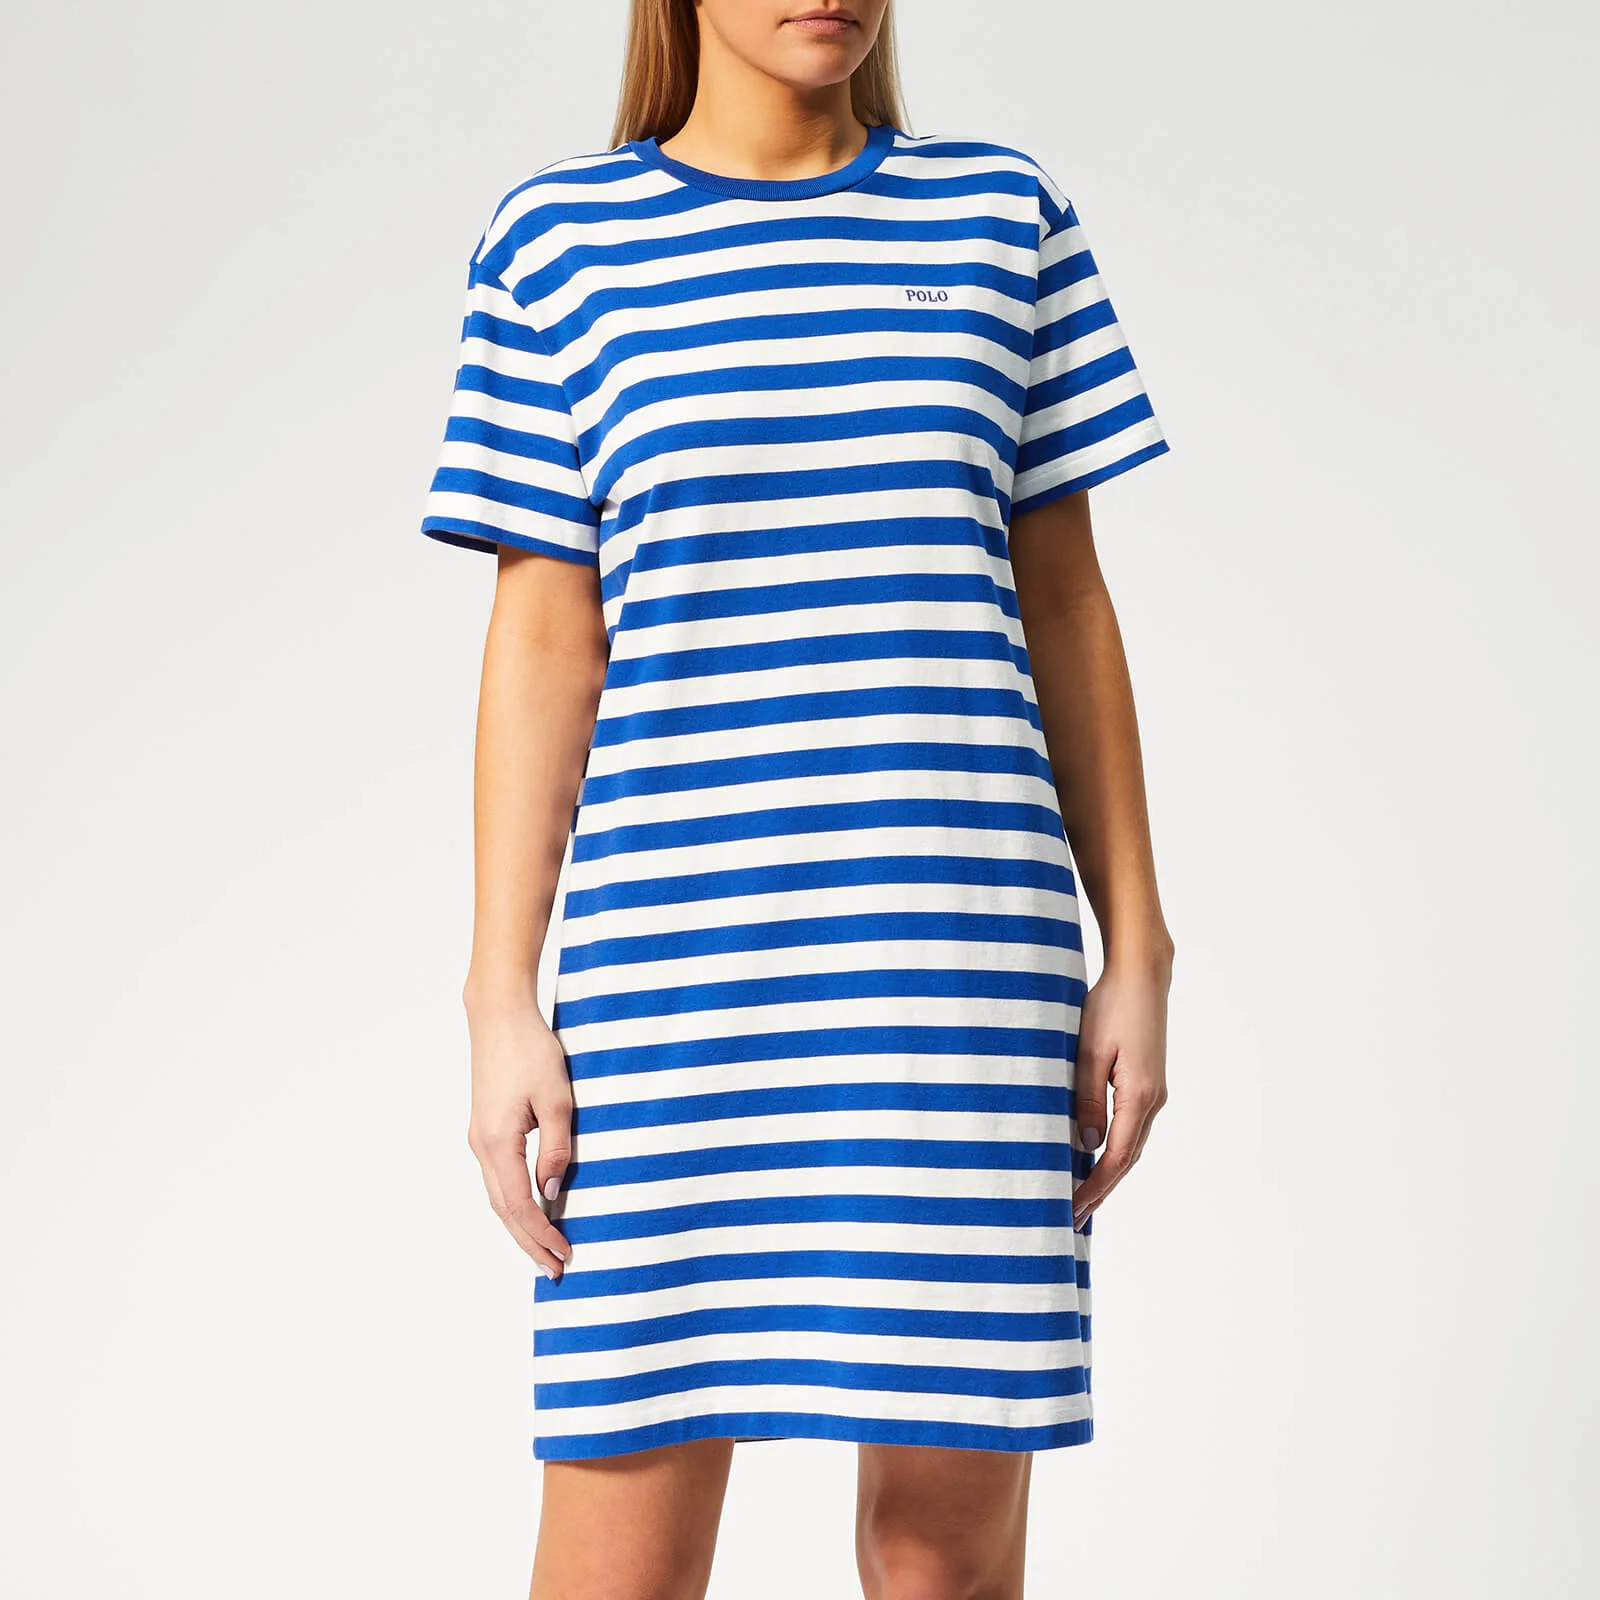 Polo Ralph Lauren Women's Stripe T-Shirt Dress - Blue/White Image 1